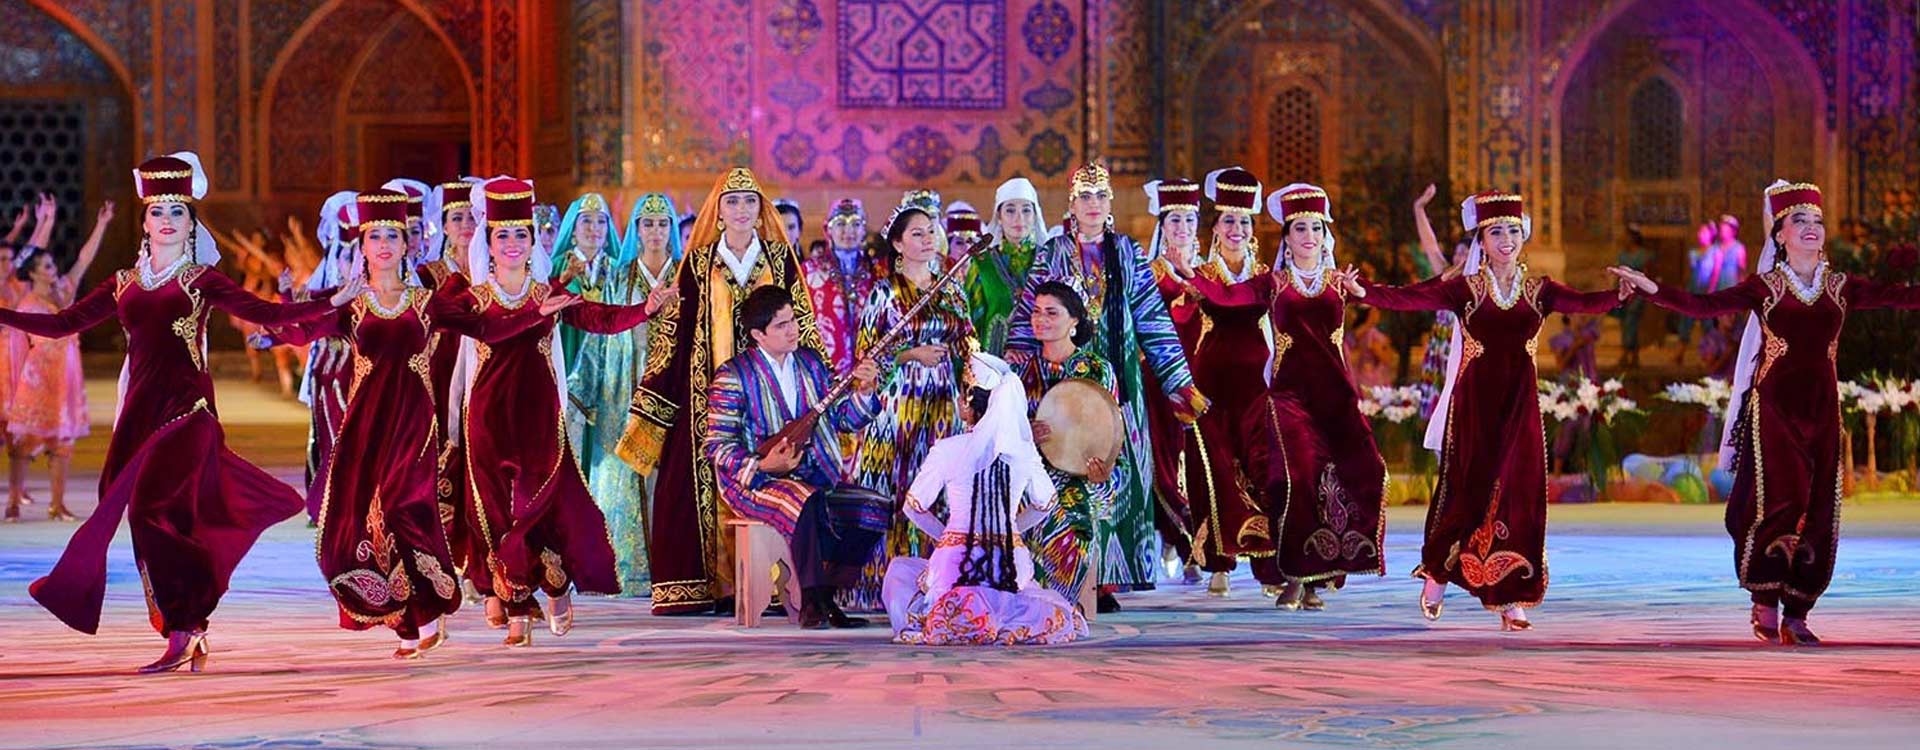 Celebration In Uzbekistan